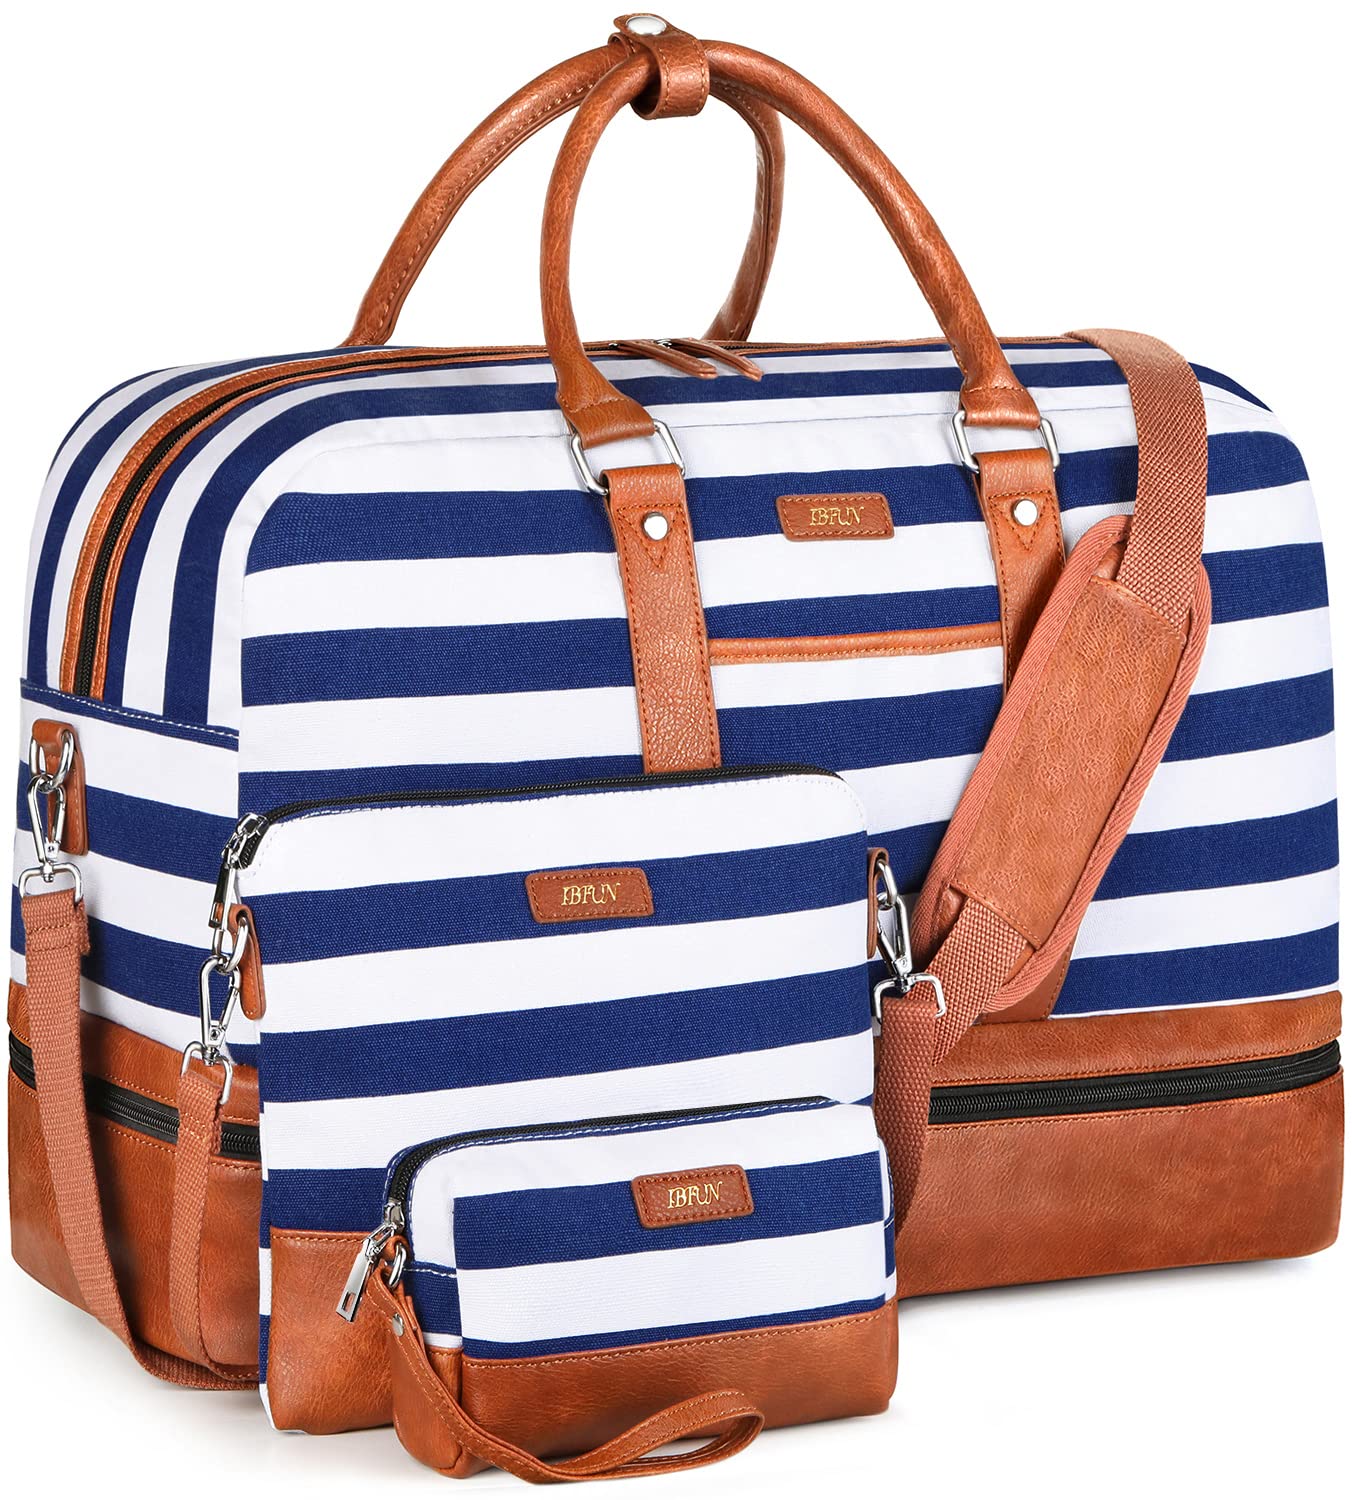 Weekender Bag for Women Travel - Overnight Bag Large Travel Bag Women -  Cute Gym, Hospital Weekend Bag Carry On Bag Tote Duffle Bag Canvas Vegan